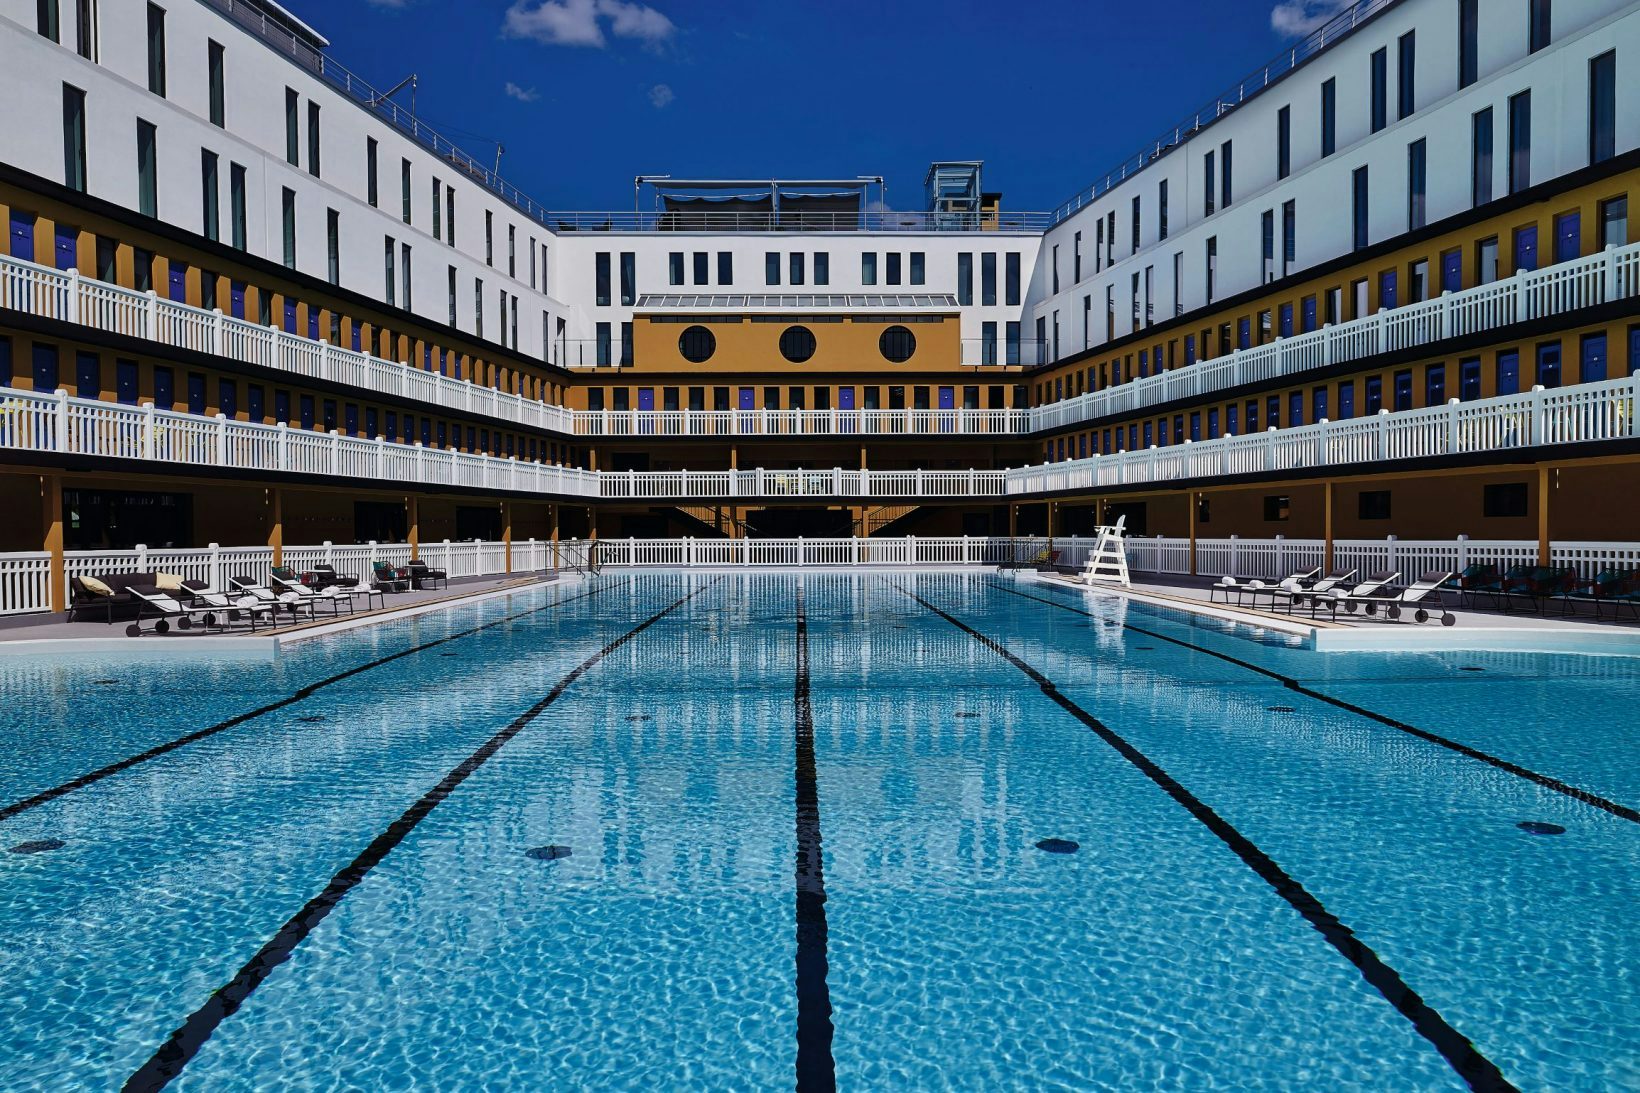 “A hotel must reinvent itself as an urban club“